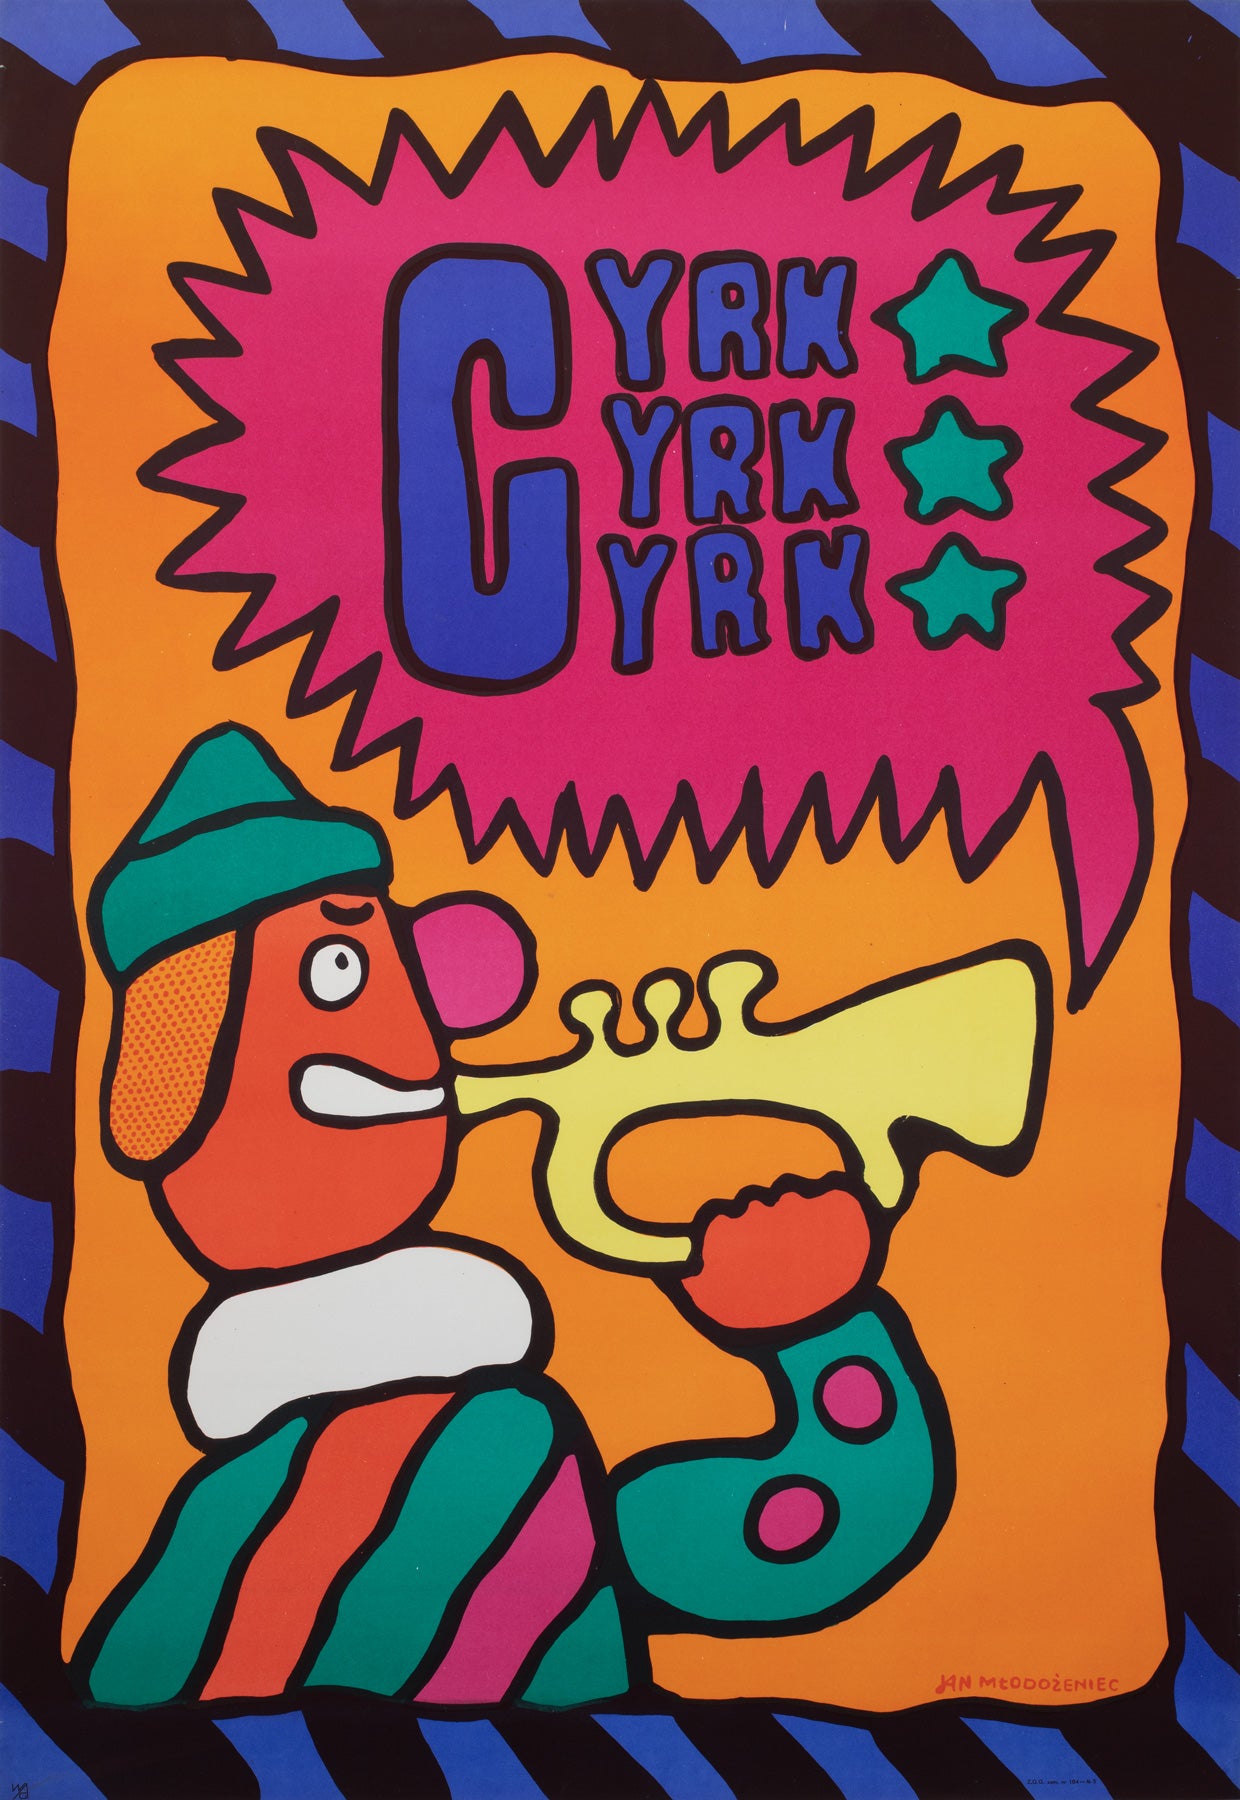 Cyrk Trumpet Clown 1969 Polish B1 Circus Poster, Jan Mlodozeniec